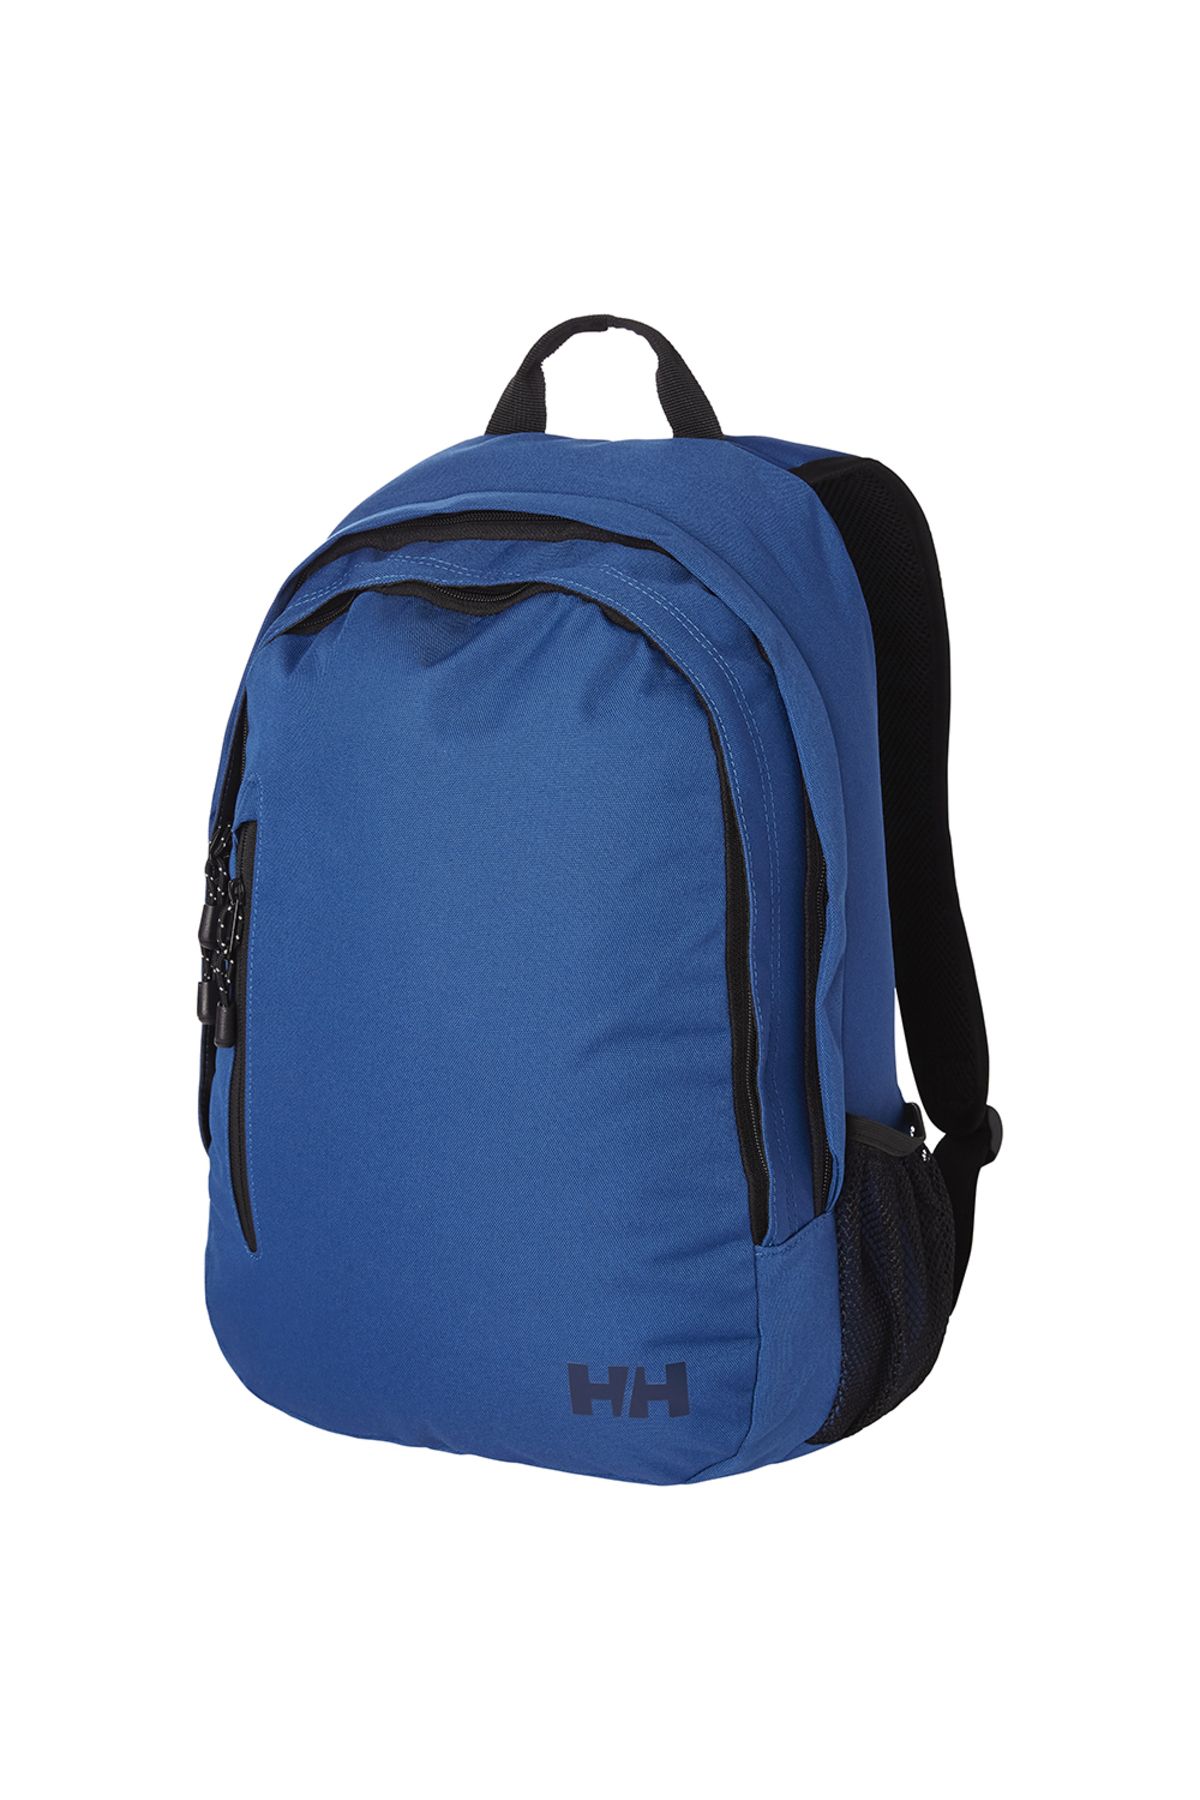 Helly Hansen Dublın 2.0 Backpack